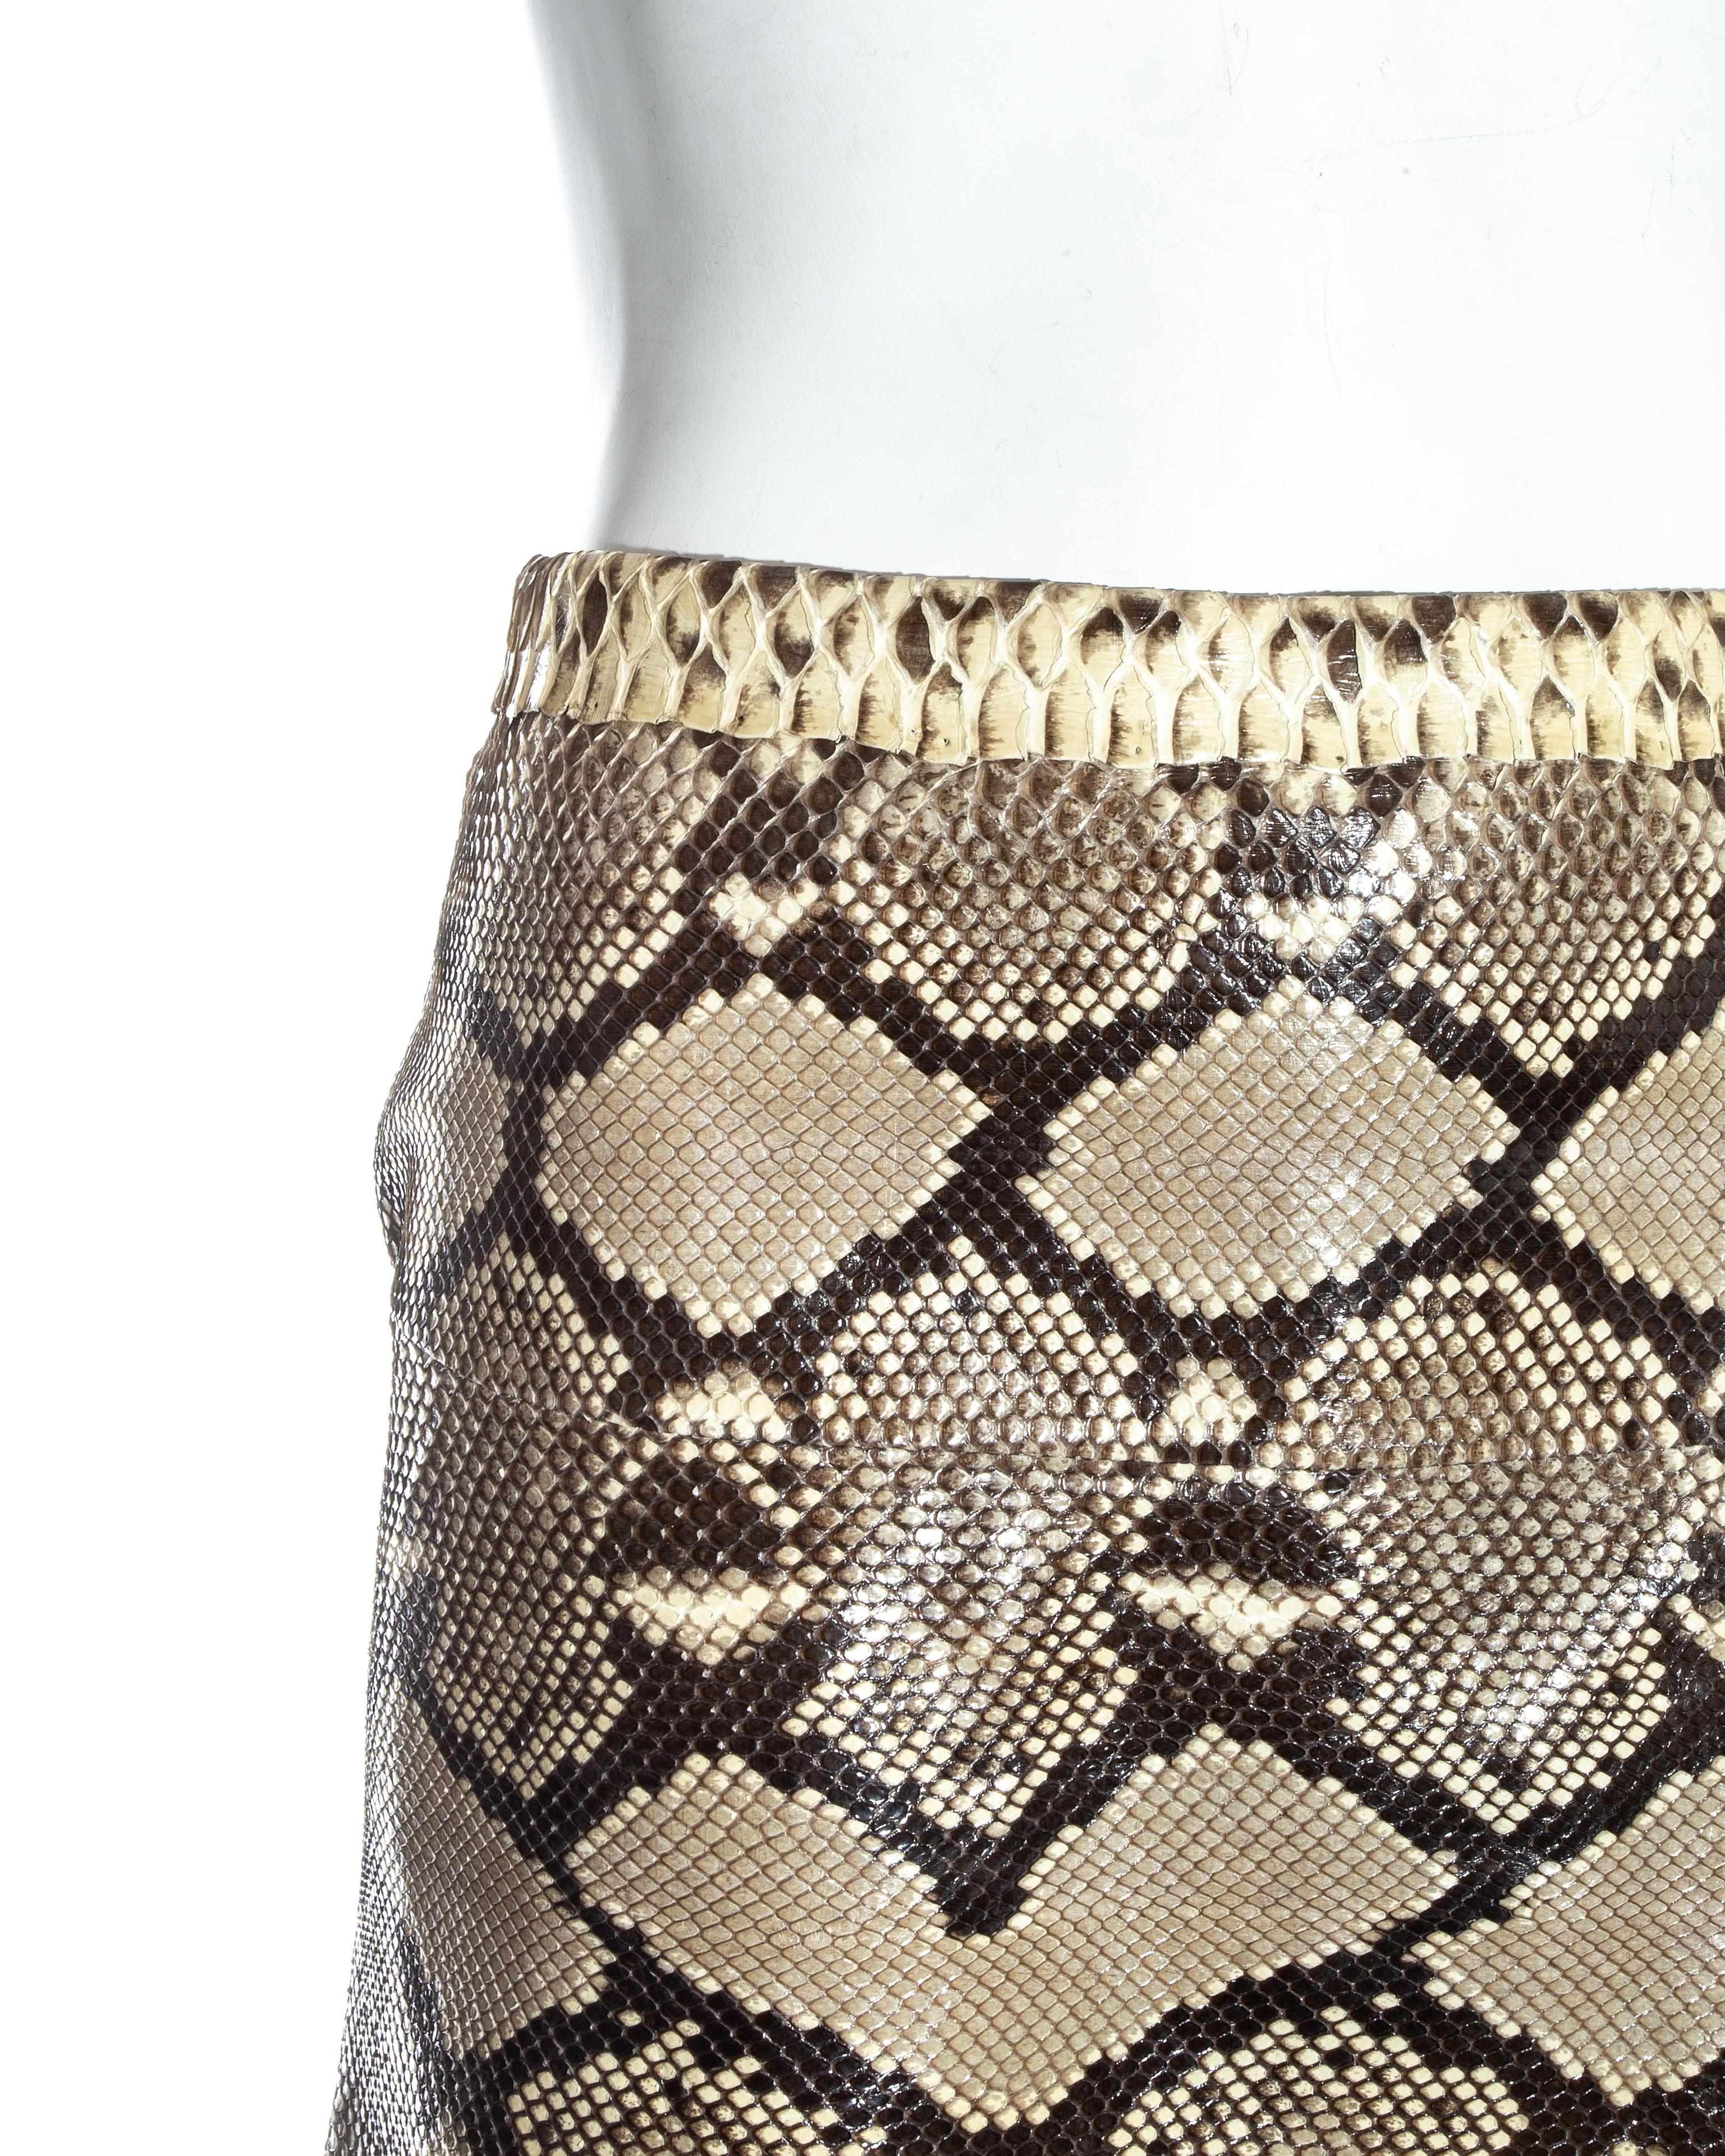 Dolce & Gabbana cream python mini skirt

Spring-Summer 2005